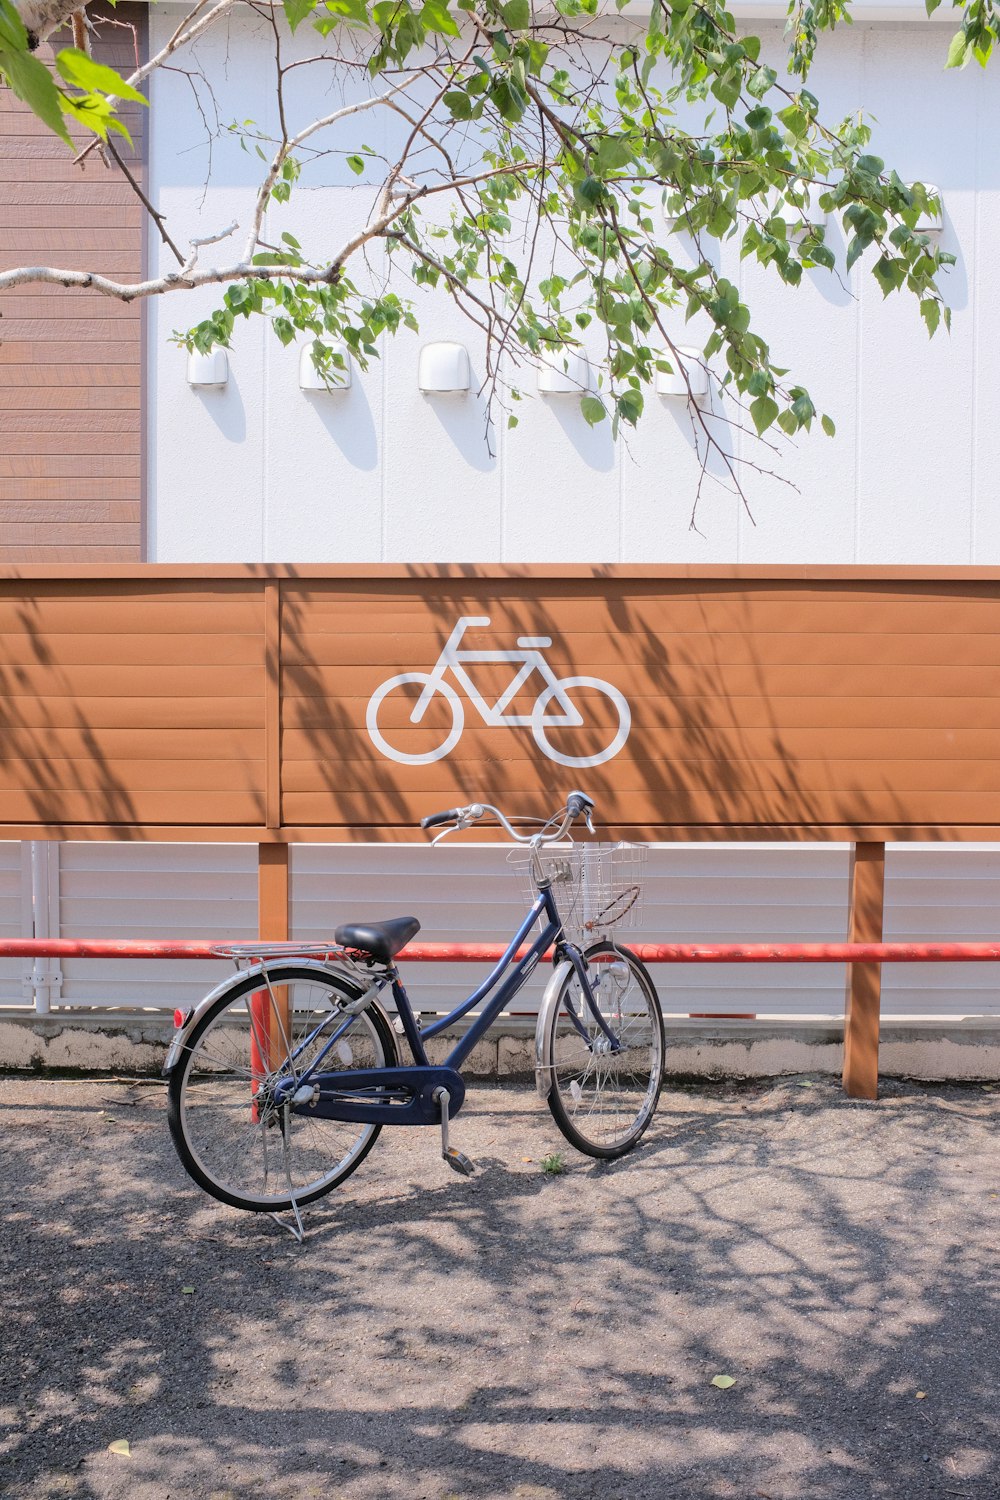 Bicicleta urbana negra estacionada junto a un banco de madera marrón